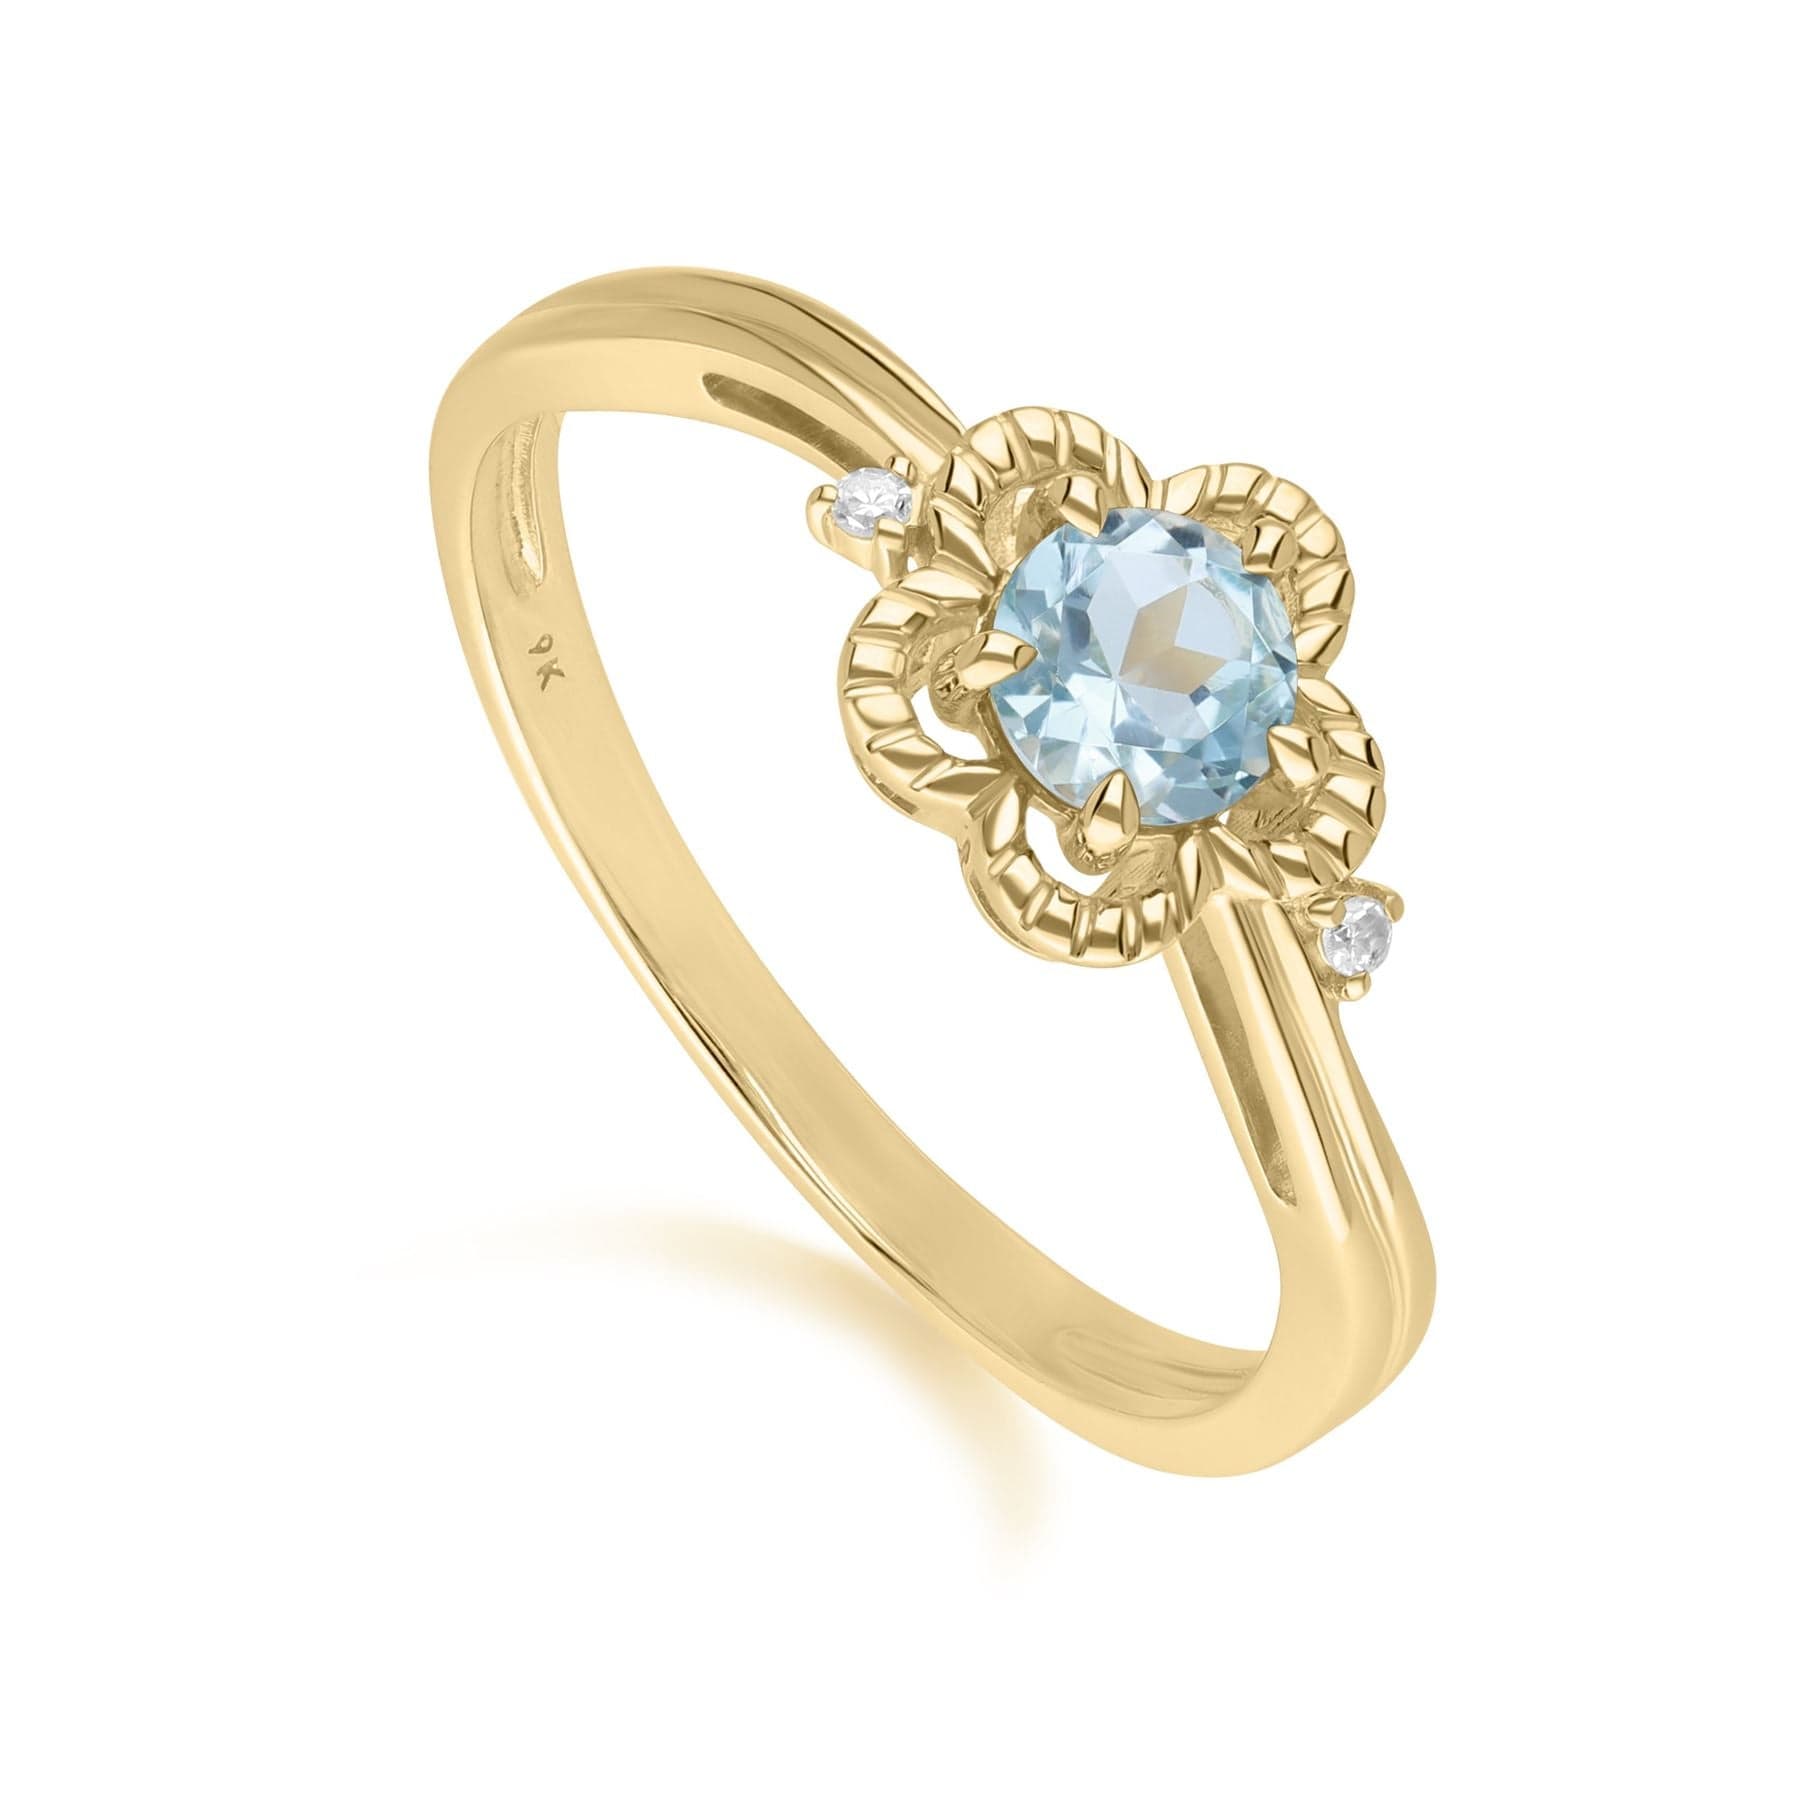 Floral Round Blue Topaz & Diamond Ring in 9ct Yellow Gold - Gemondo